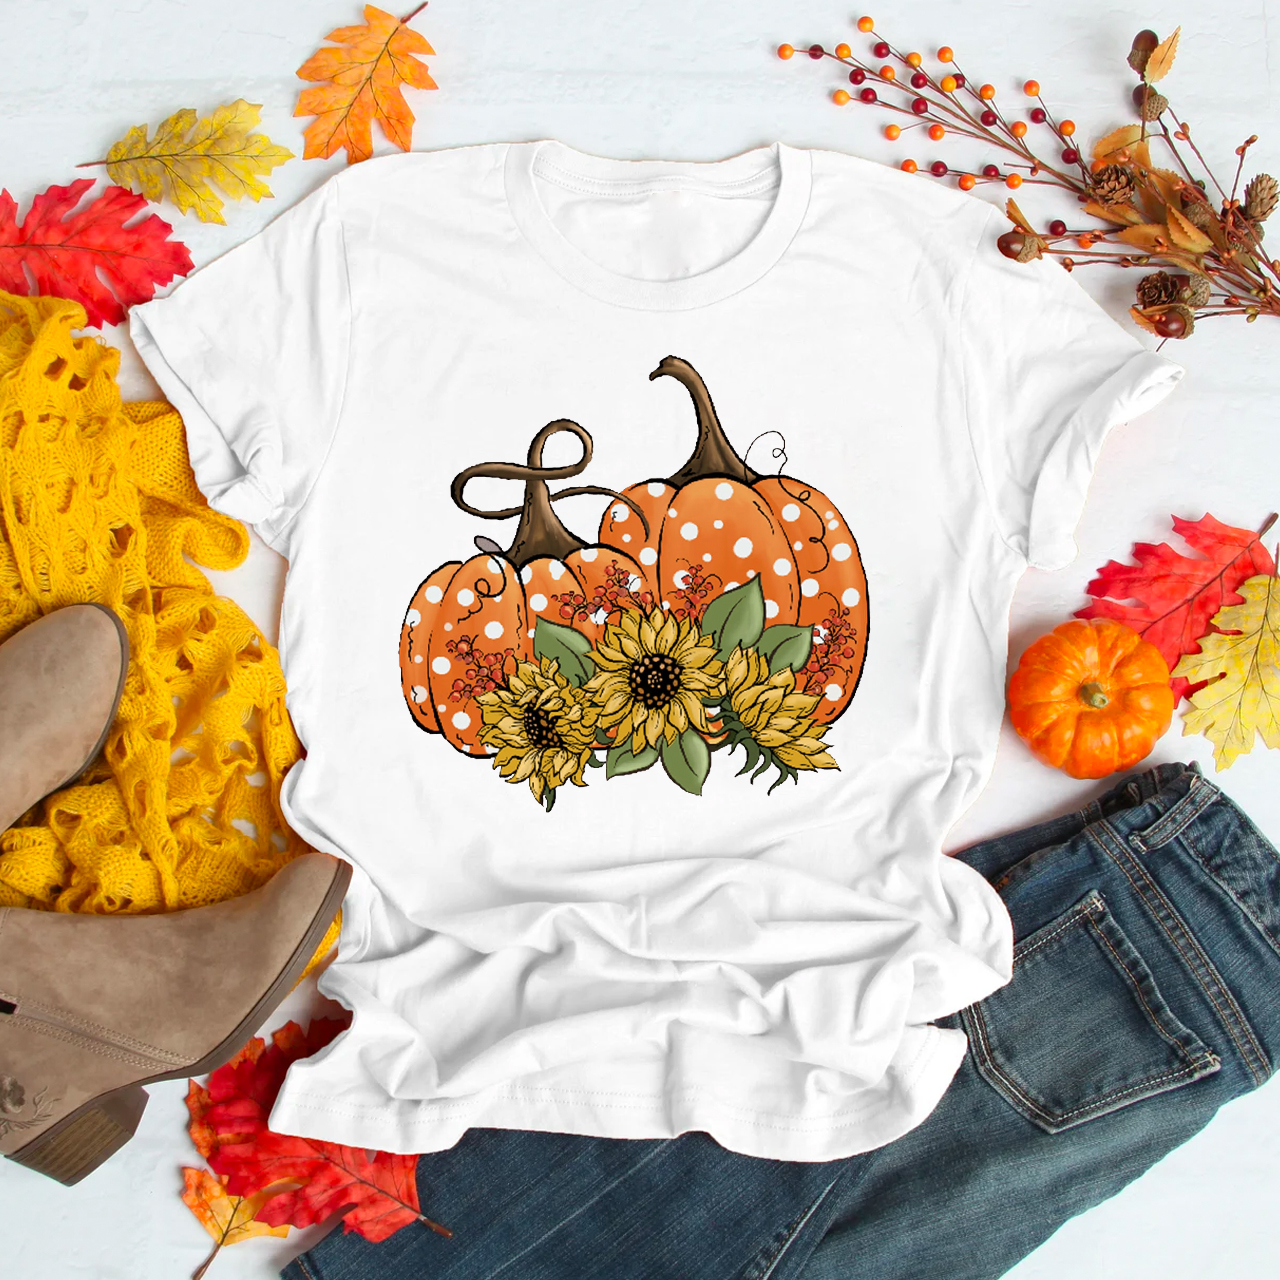 Polka Dot Pumpkins And Sunflowers Shirt For Her